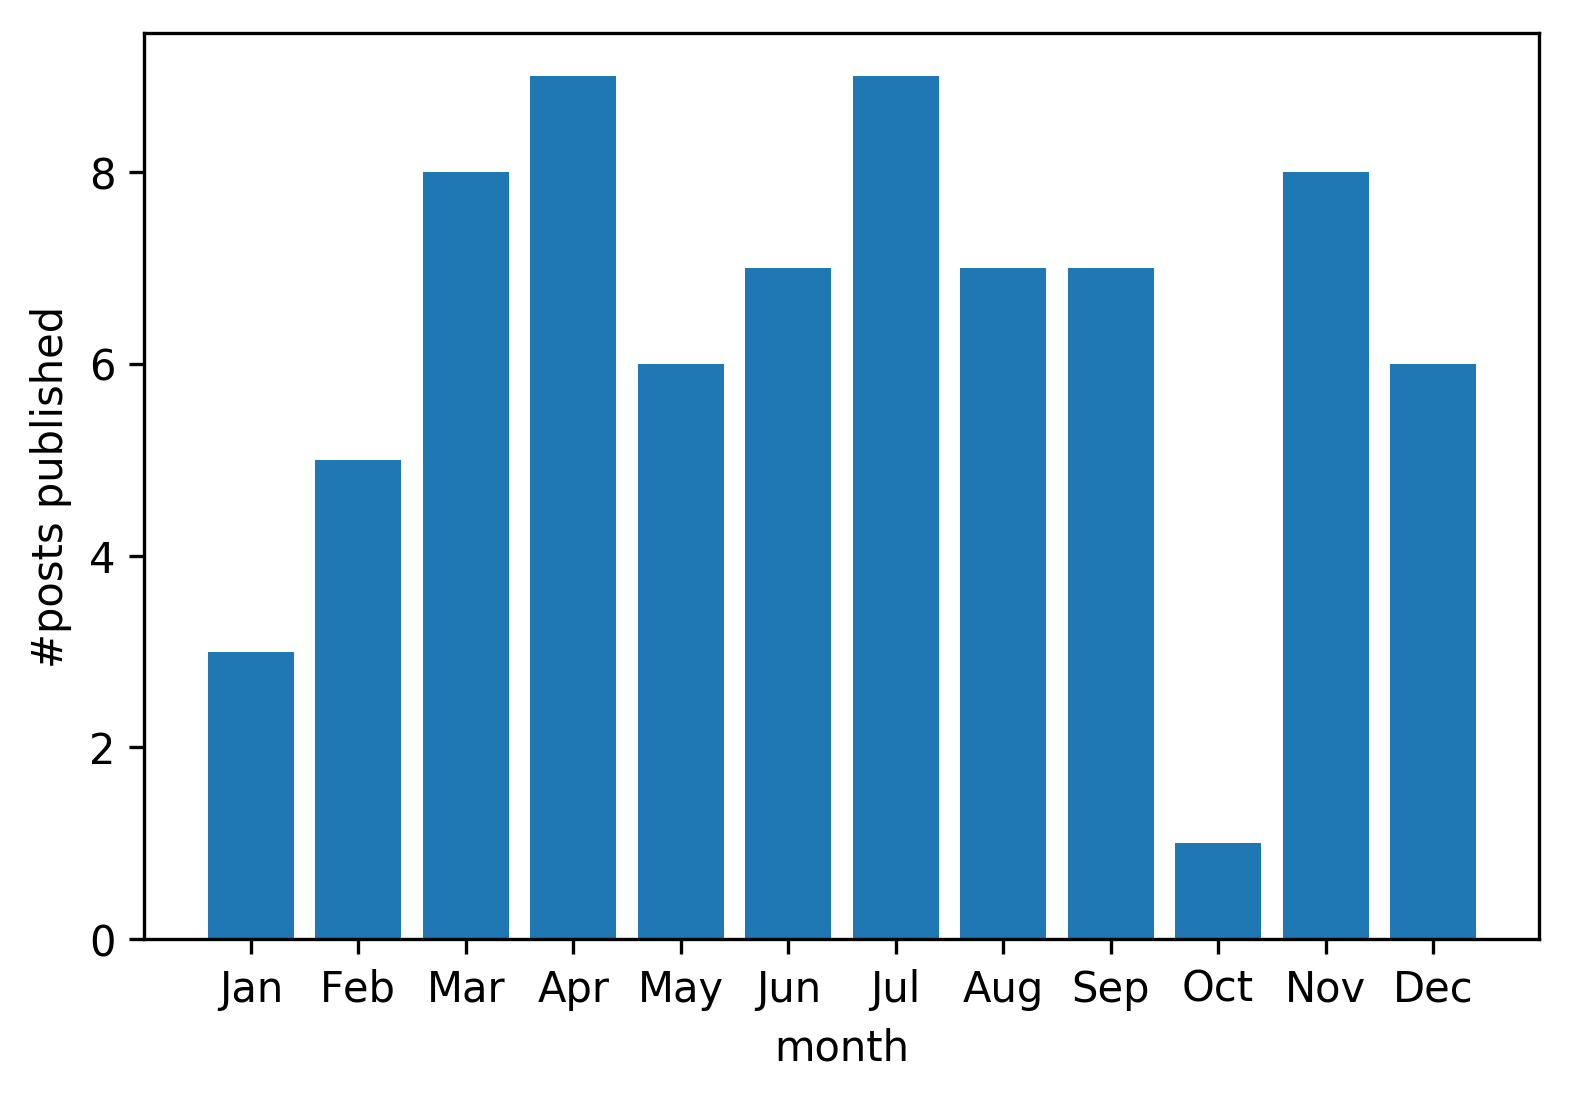 Bar plot of #posts published per month